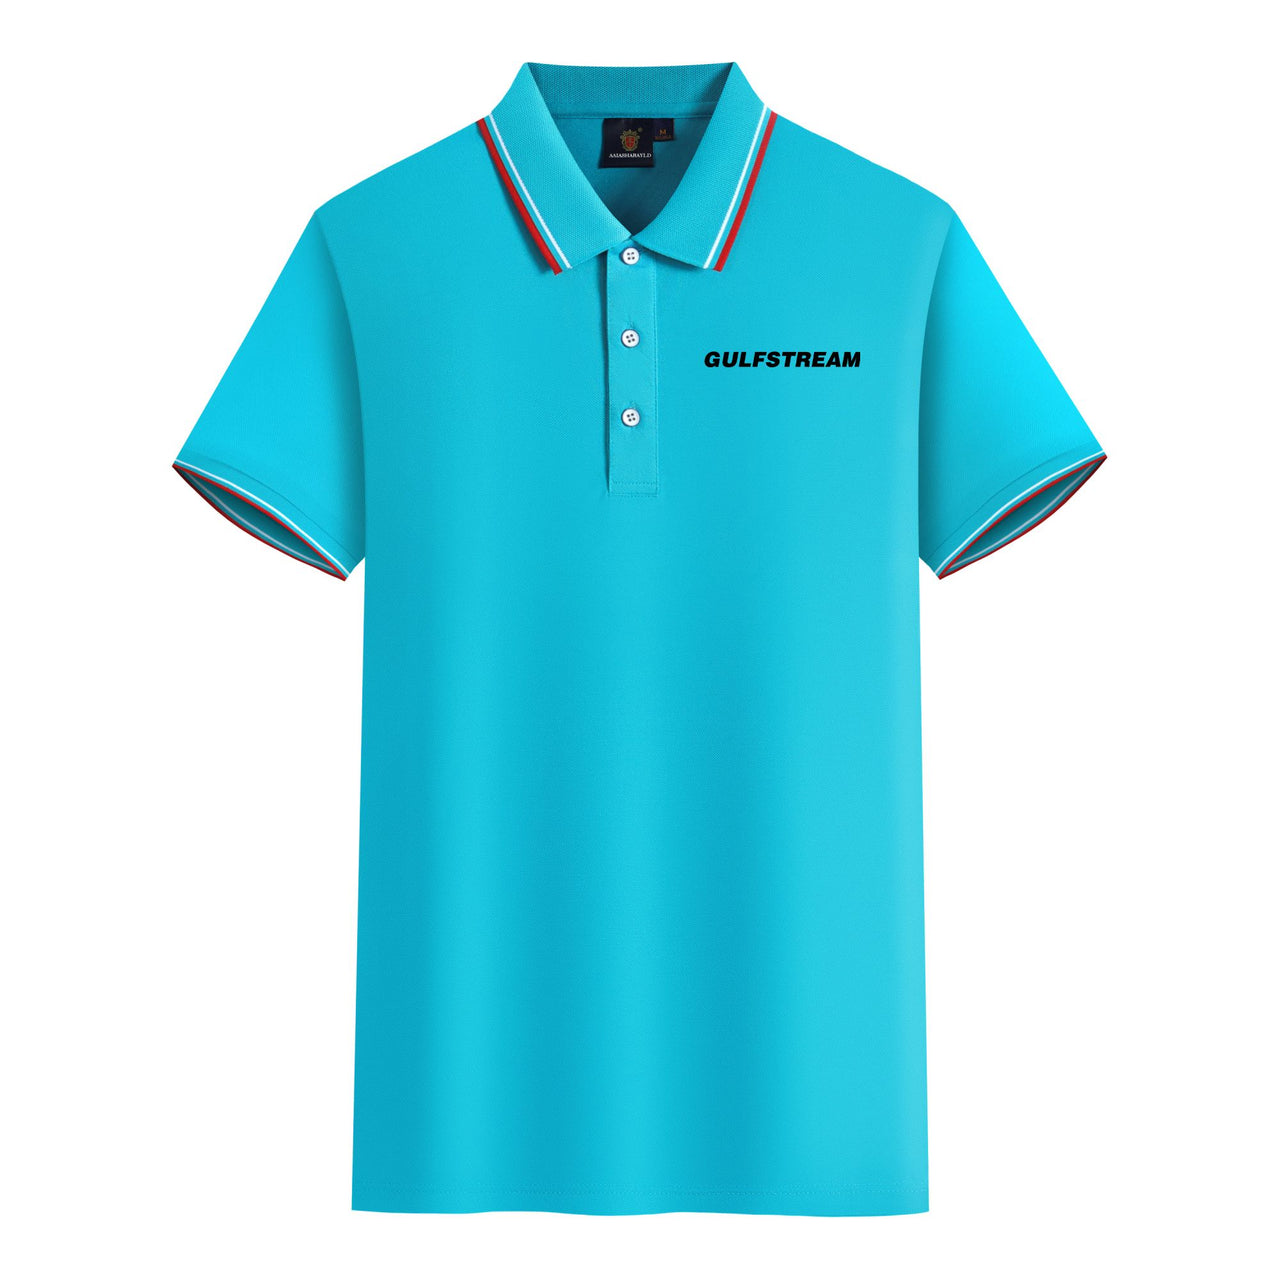 Gulfstream & Text Designed Stylish Polo T-Shirts